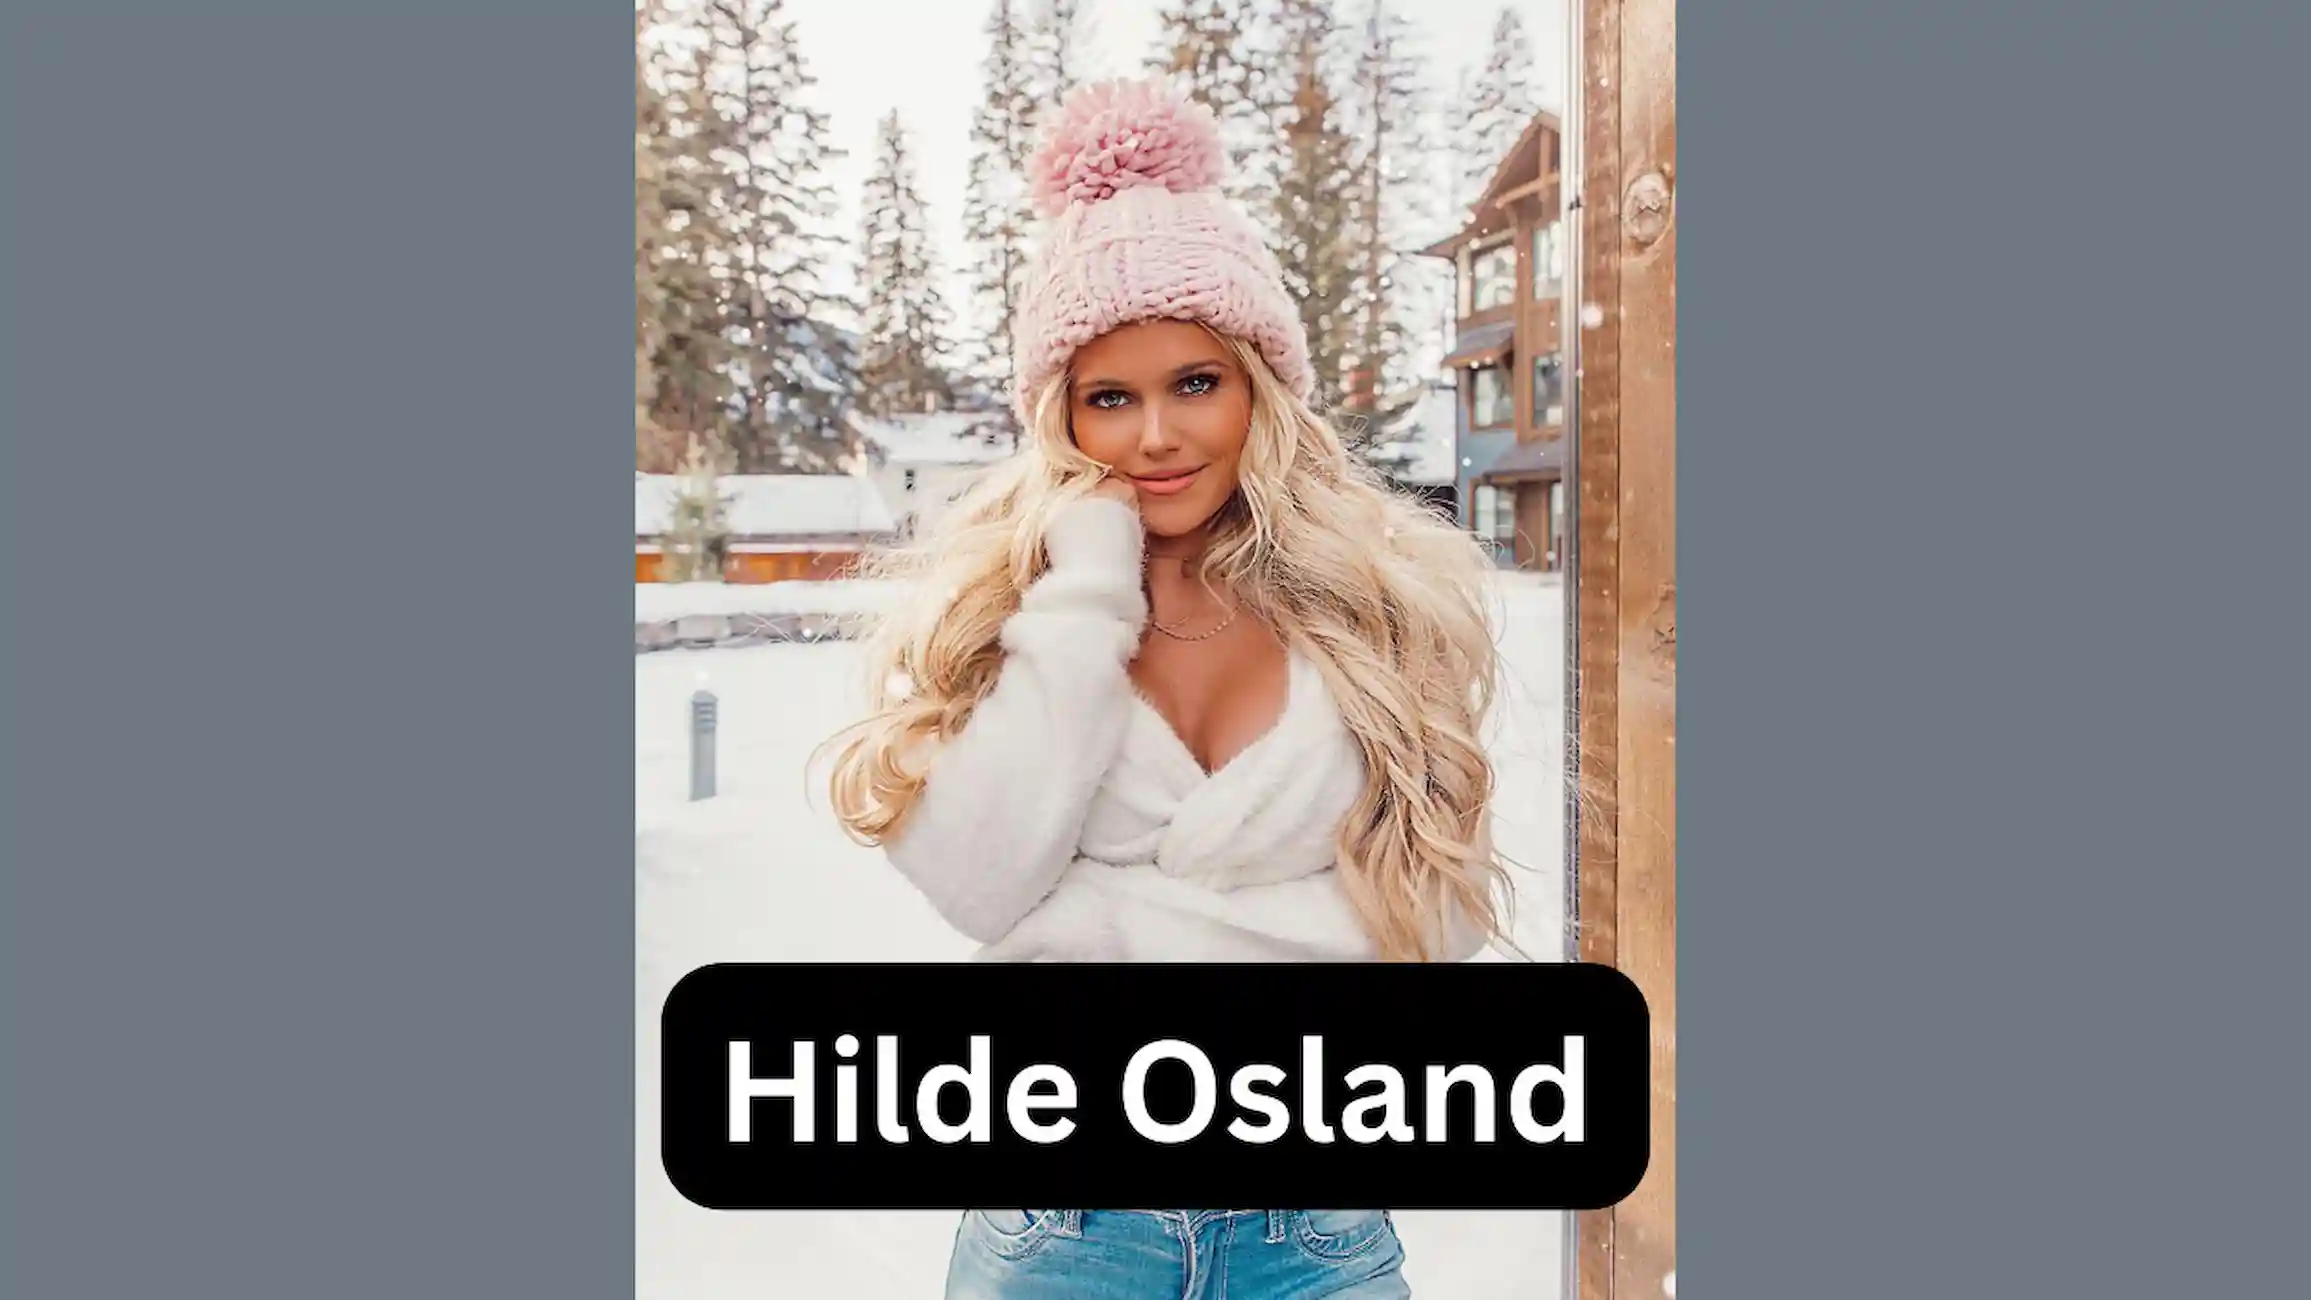 Hilde Osland Wikipedia